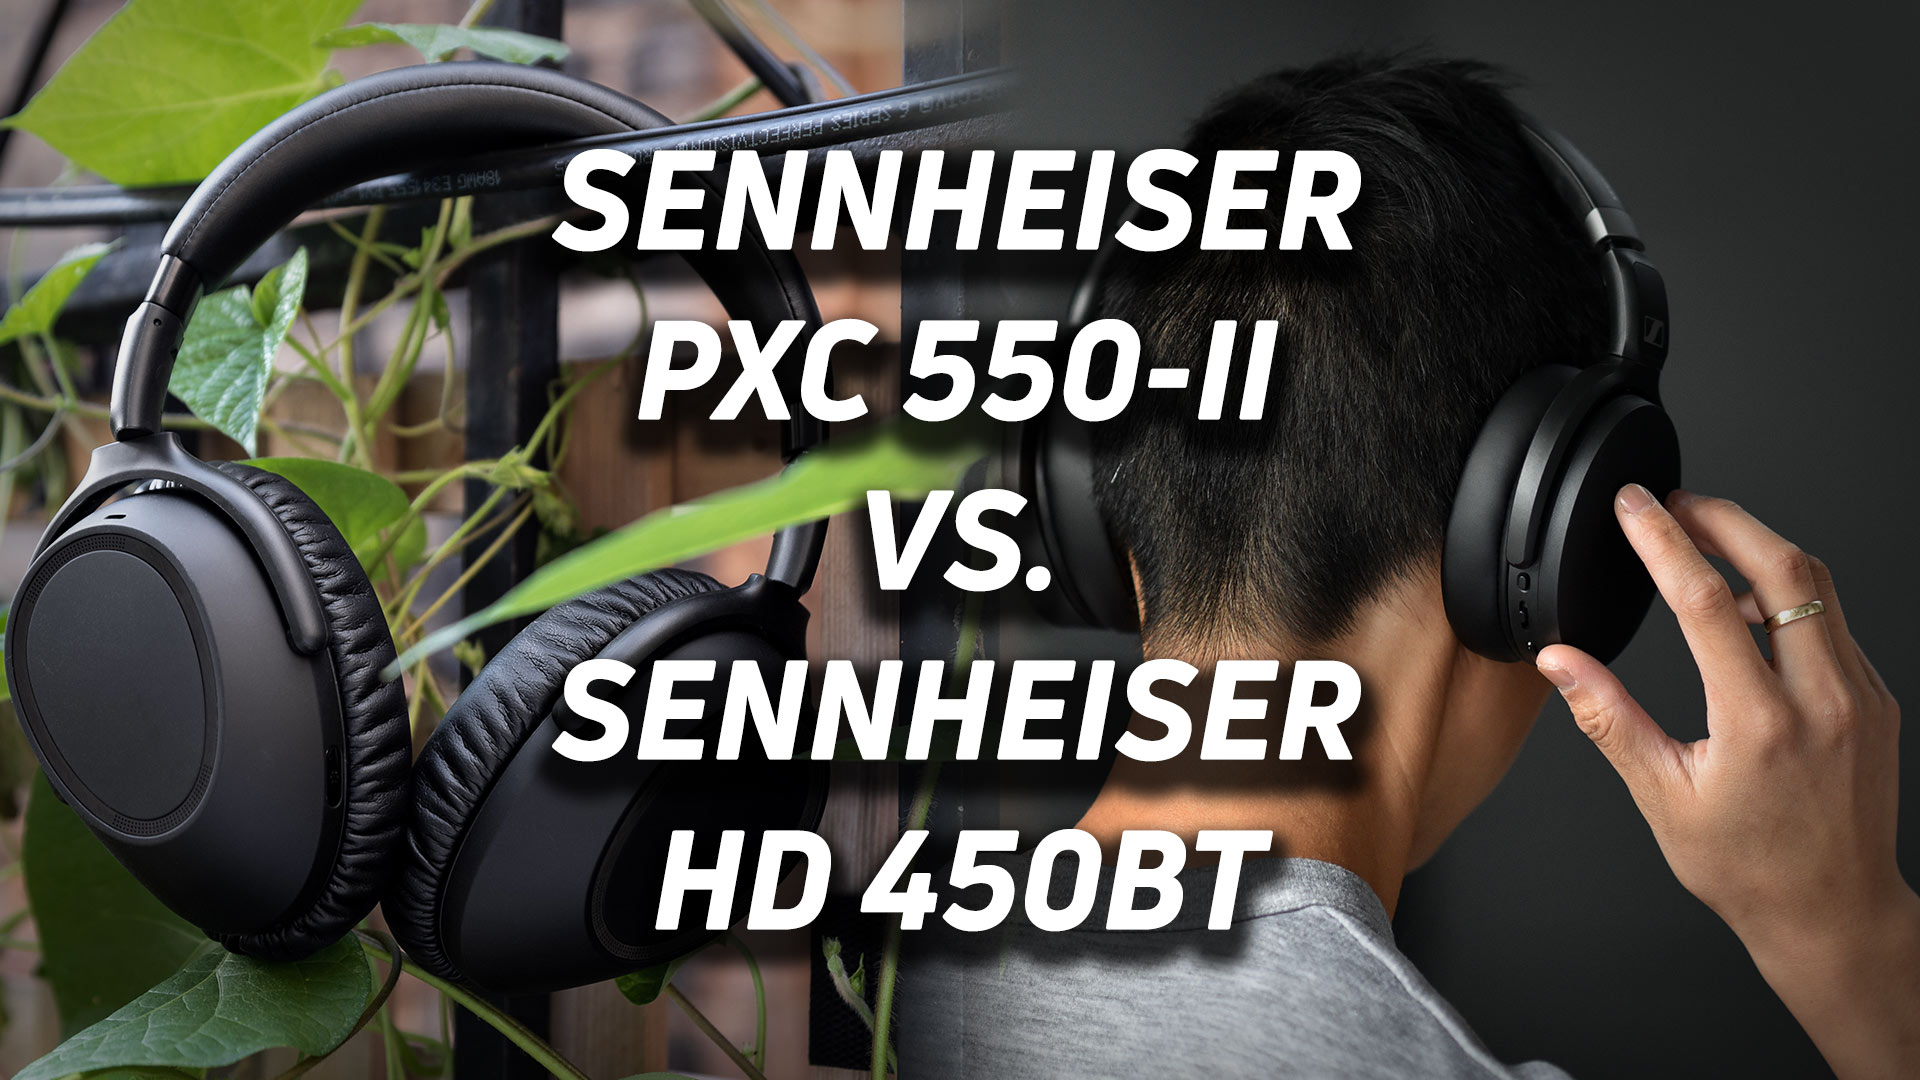 Sennheiser PXC 550-II vs. Sennheiser HD 450BT - SoundGuys